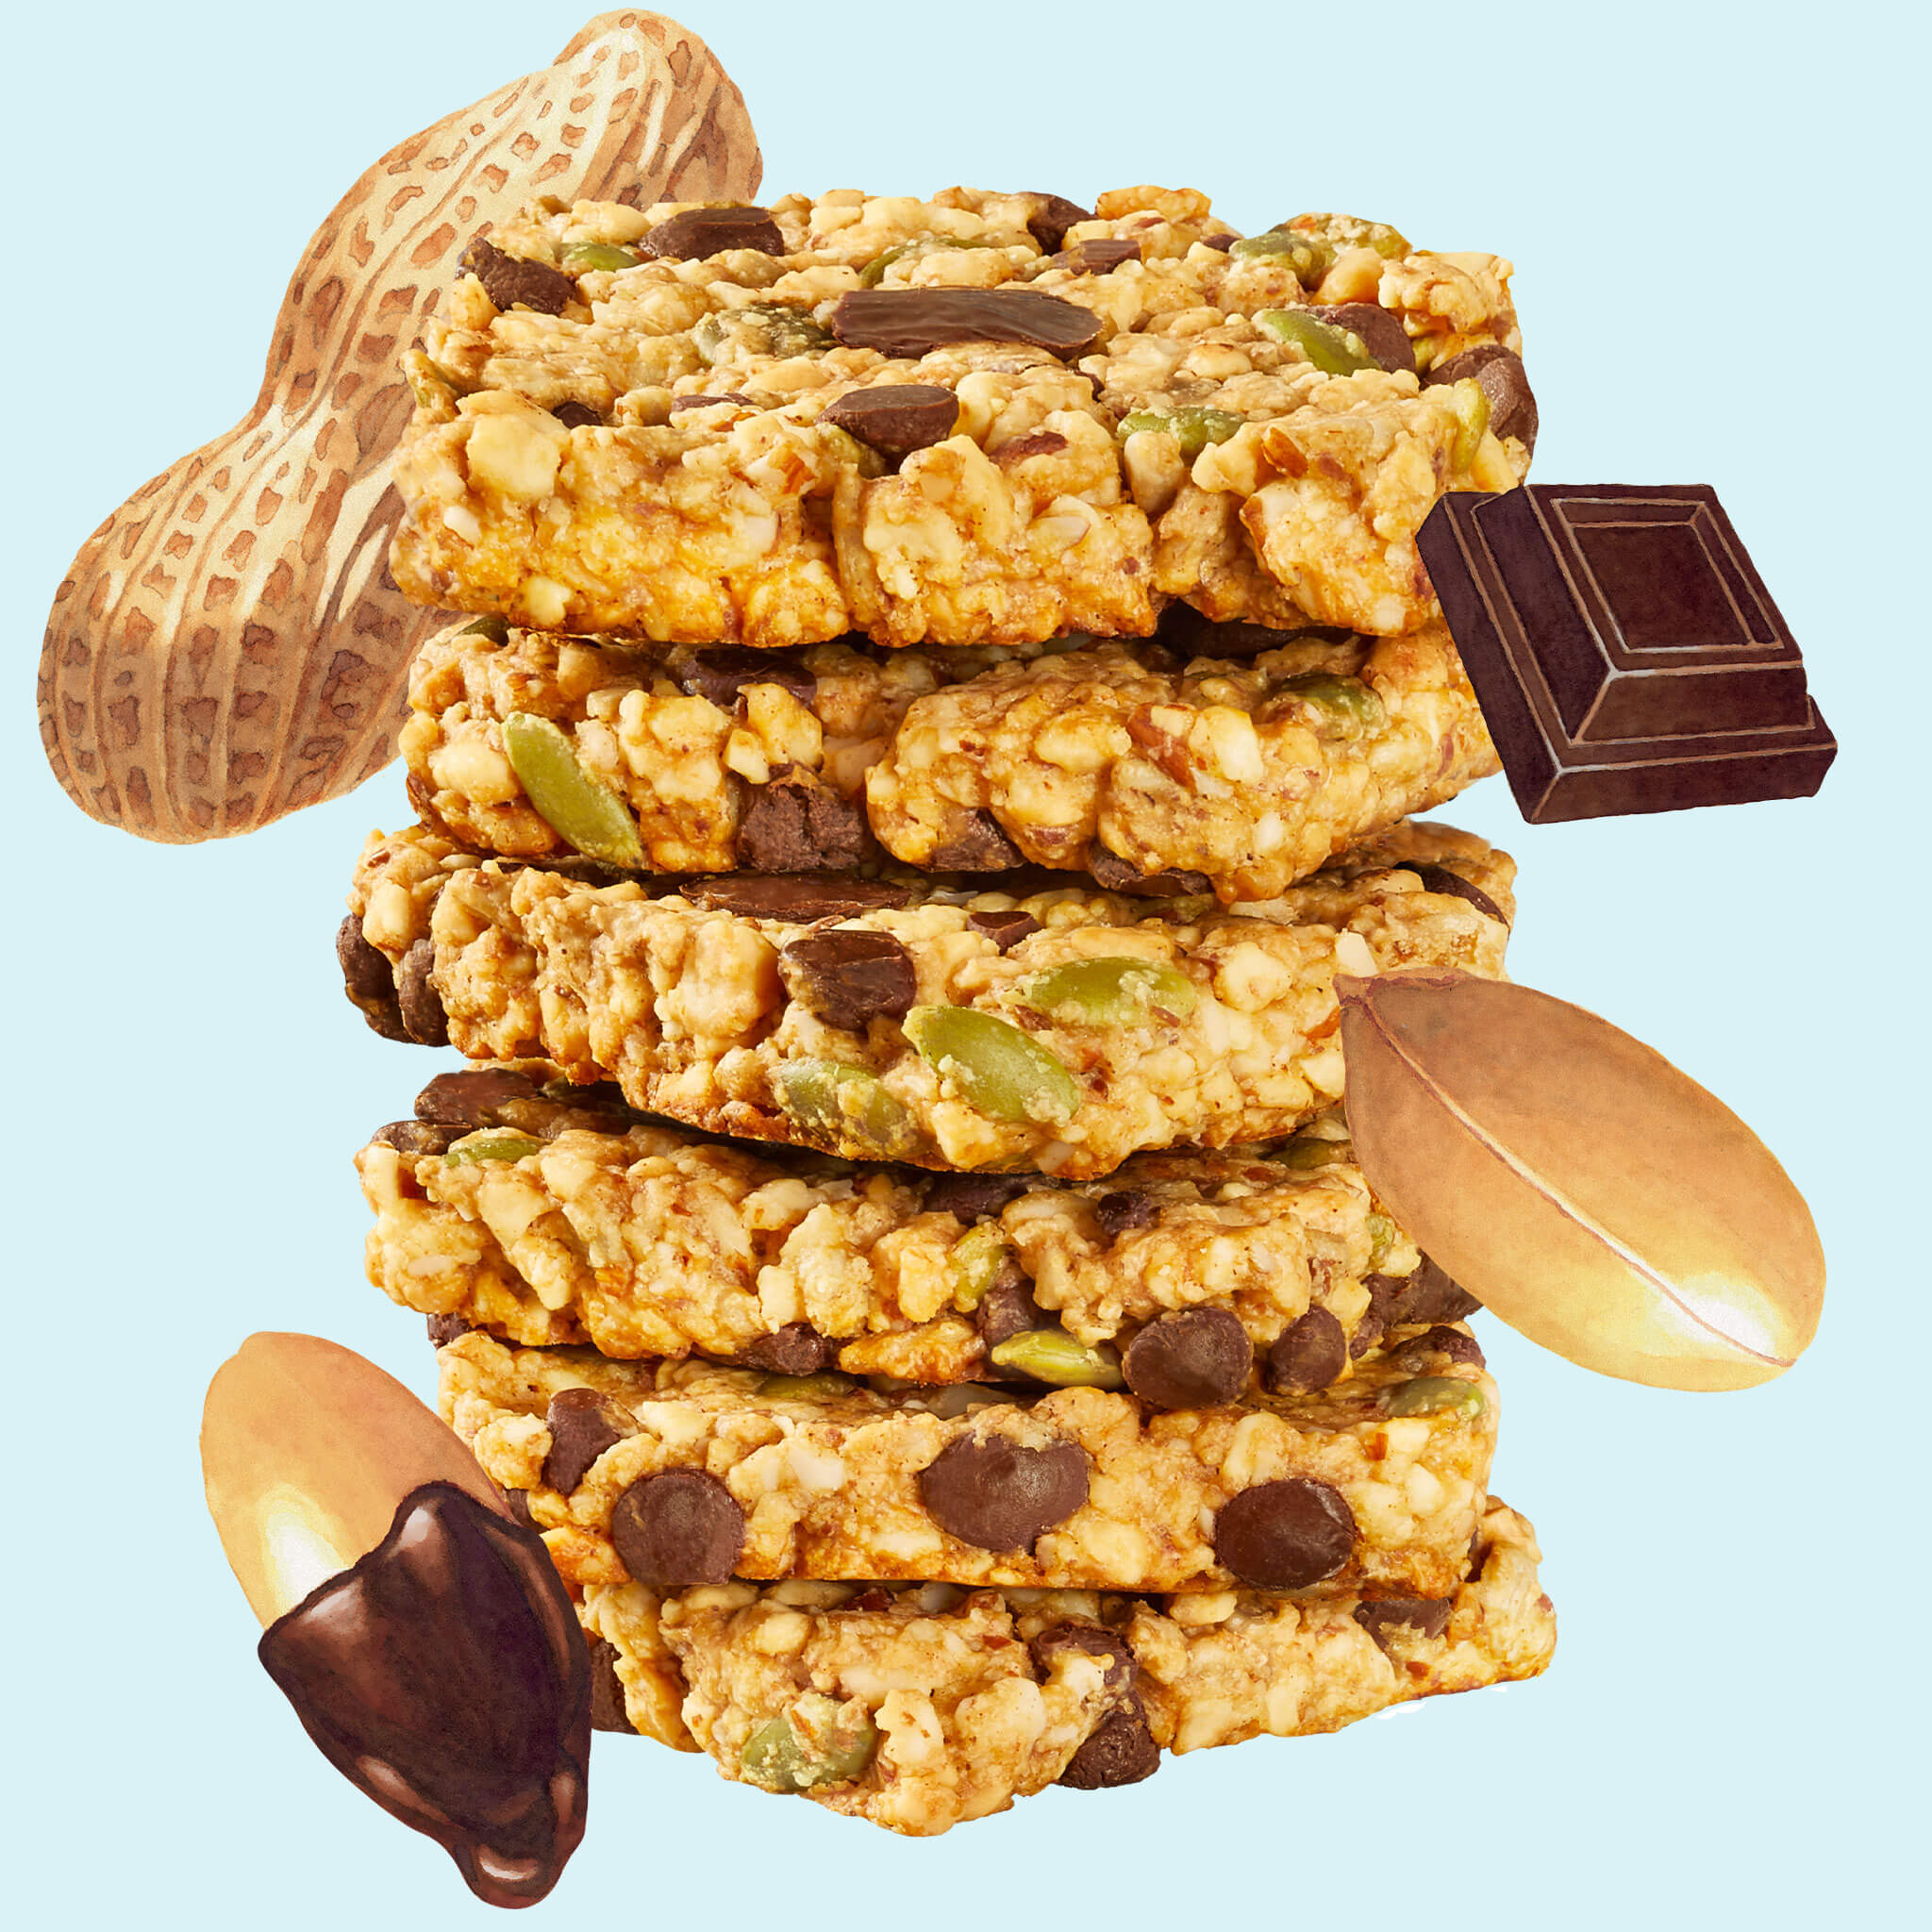 Peanut Butter Dark Chocolate Six Pack - YES BAR®